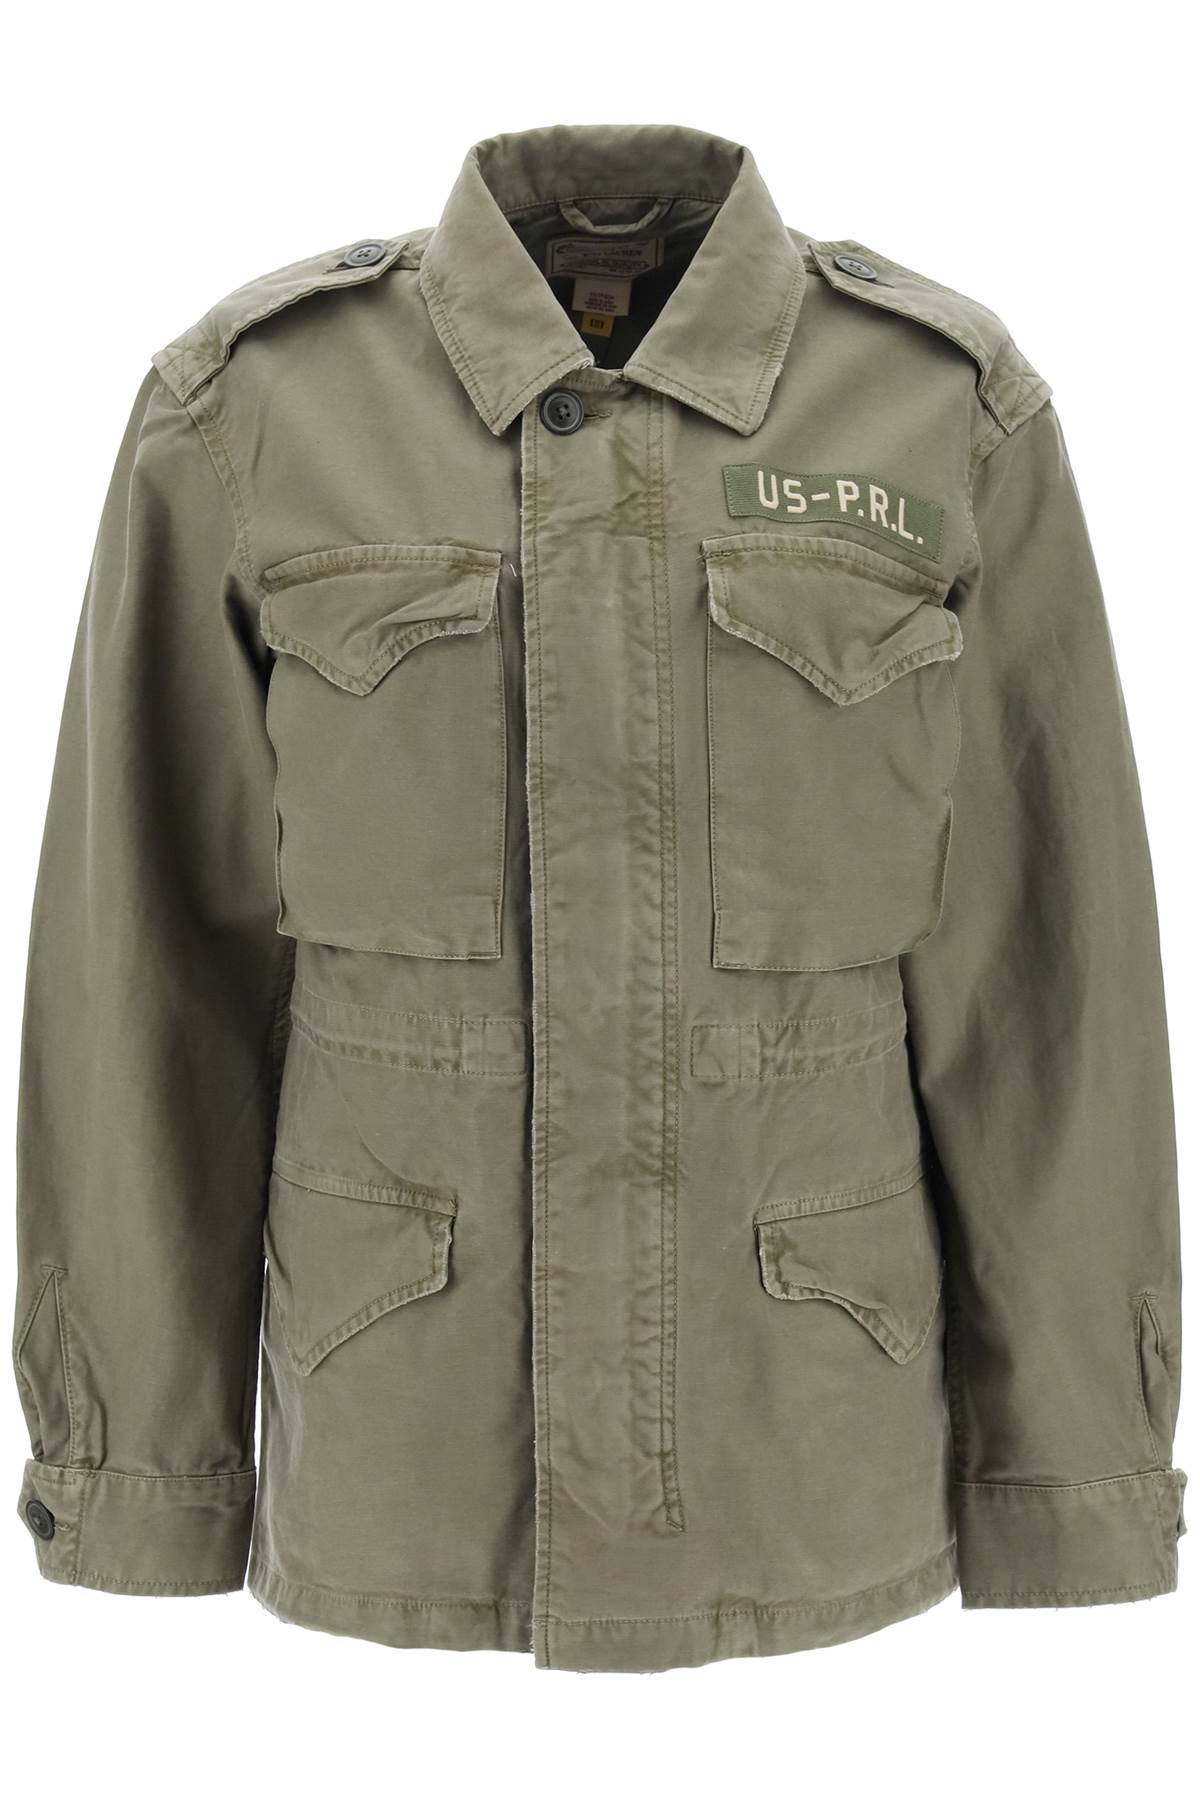 Polo Ralph Lauren POLO RALPH LAUREN cotton military jacket